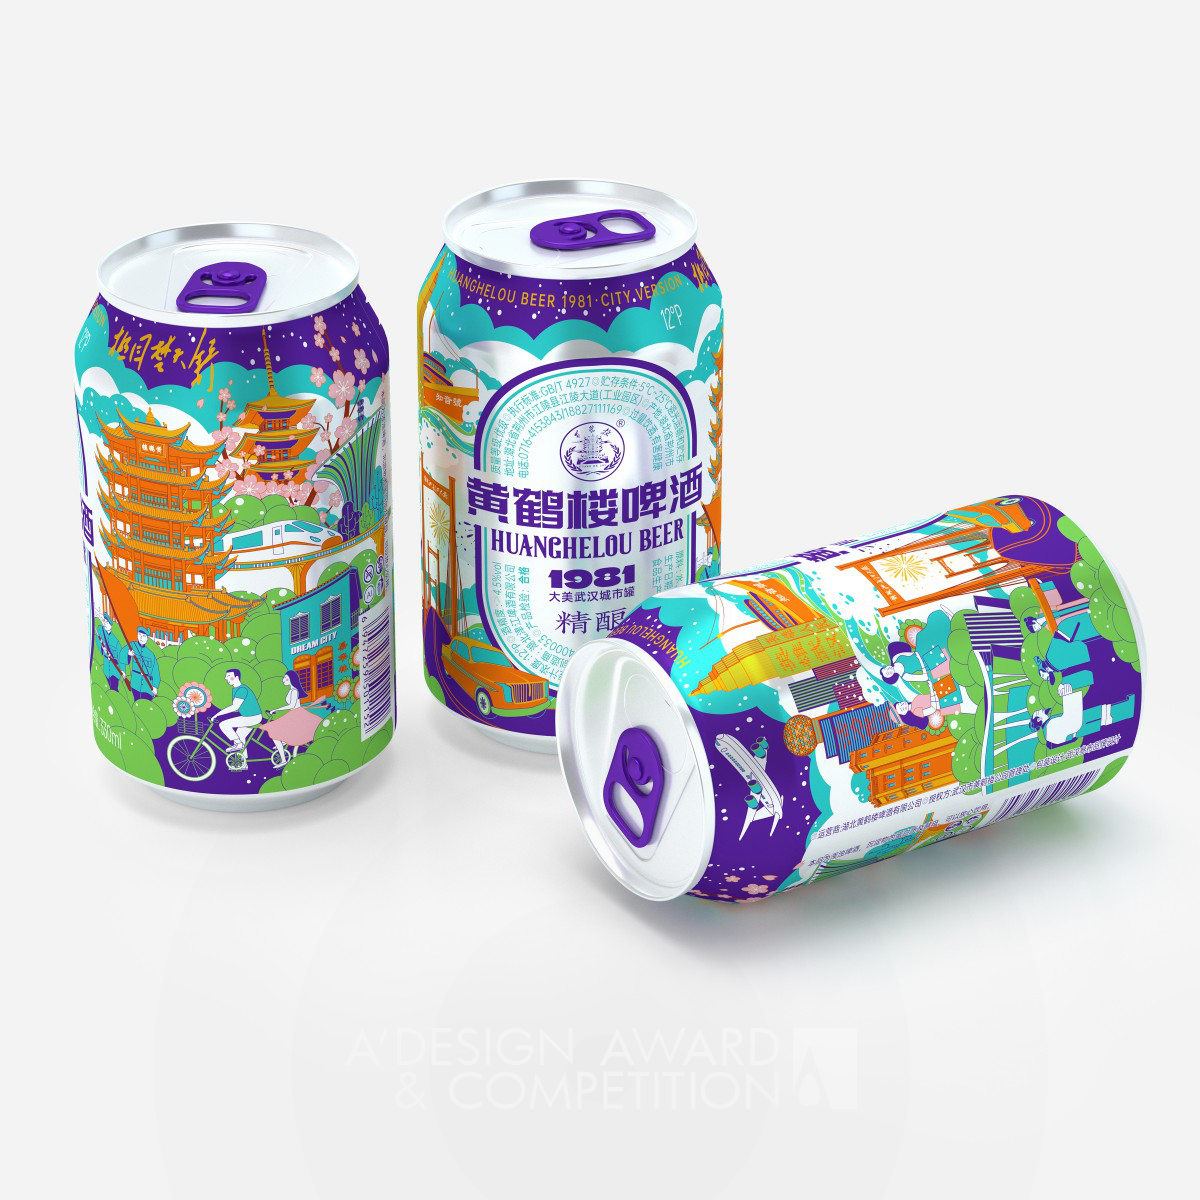 Huanghelou Beer Packaging: A City&#039;s Essence in Every Sip